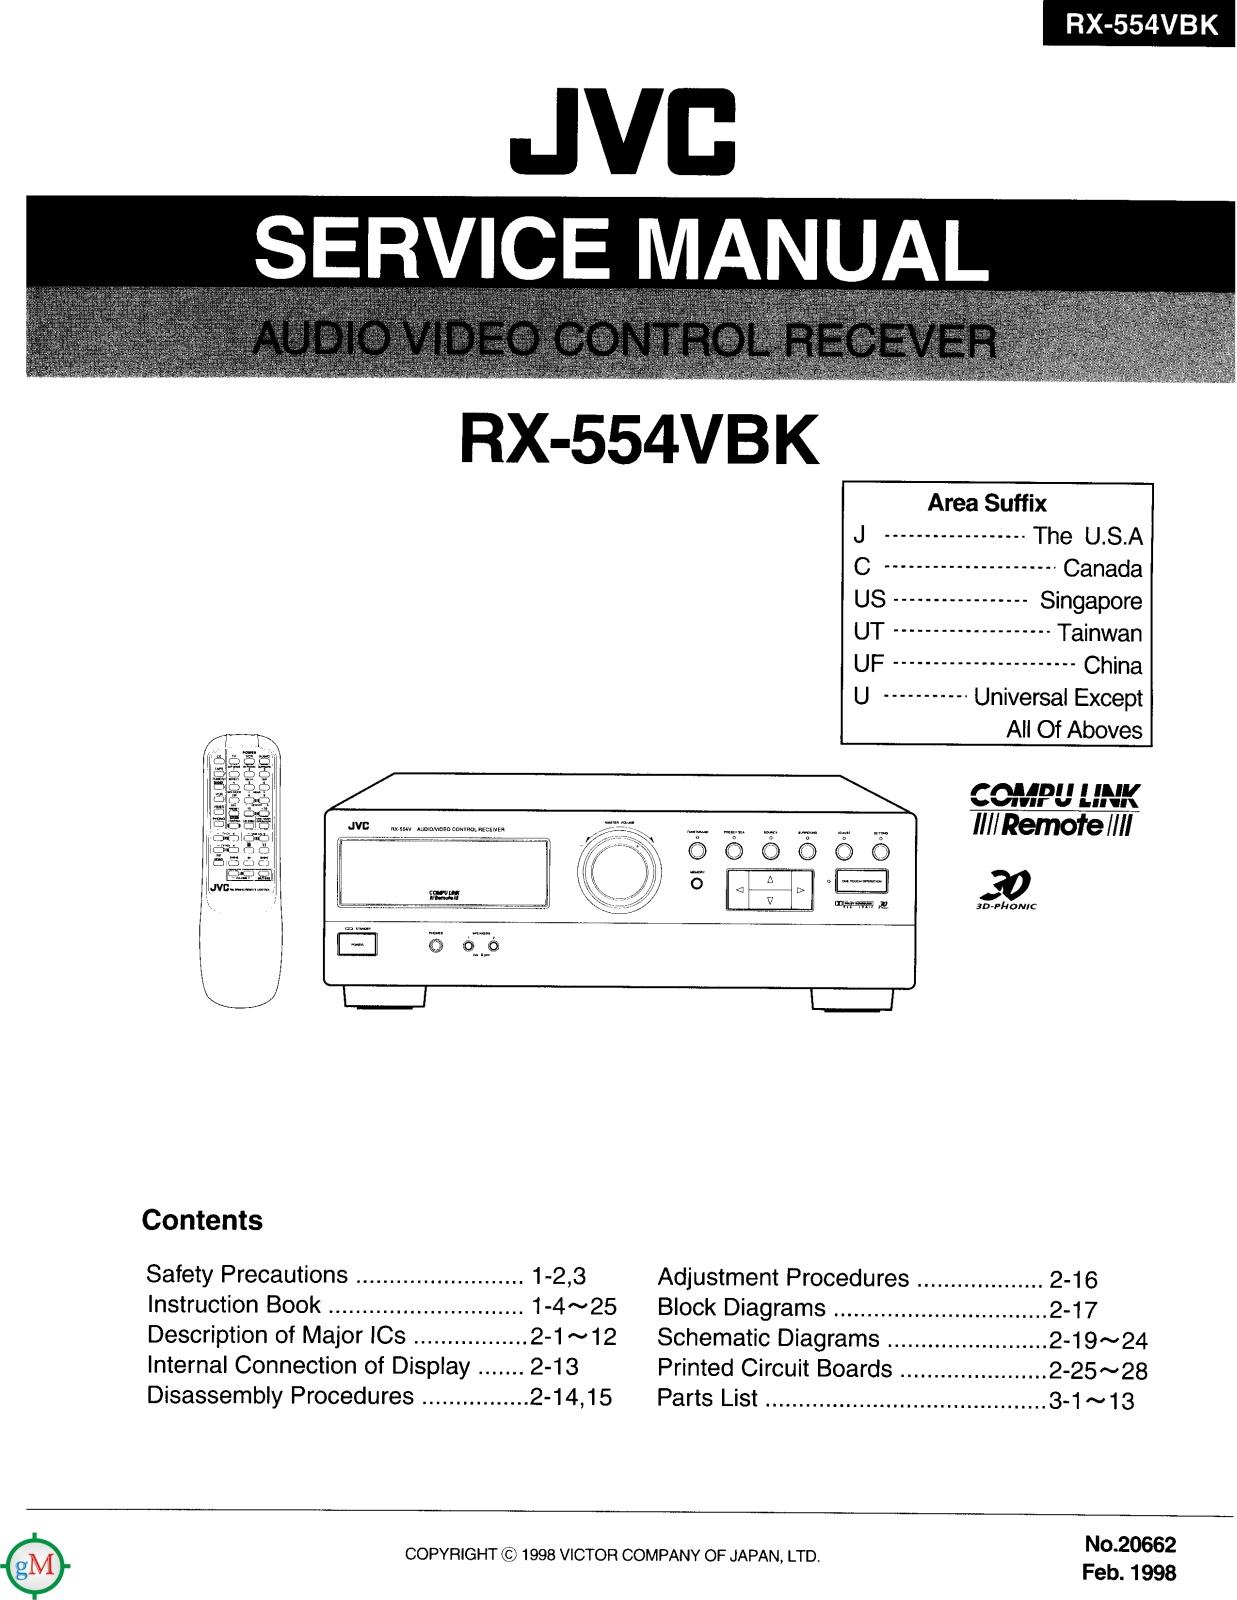 JVC RX-554-VBK Service manual